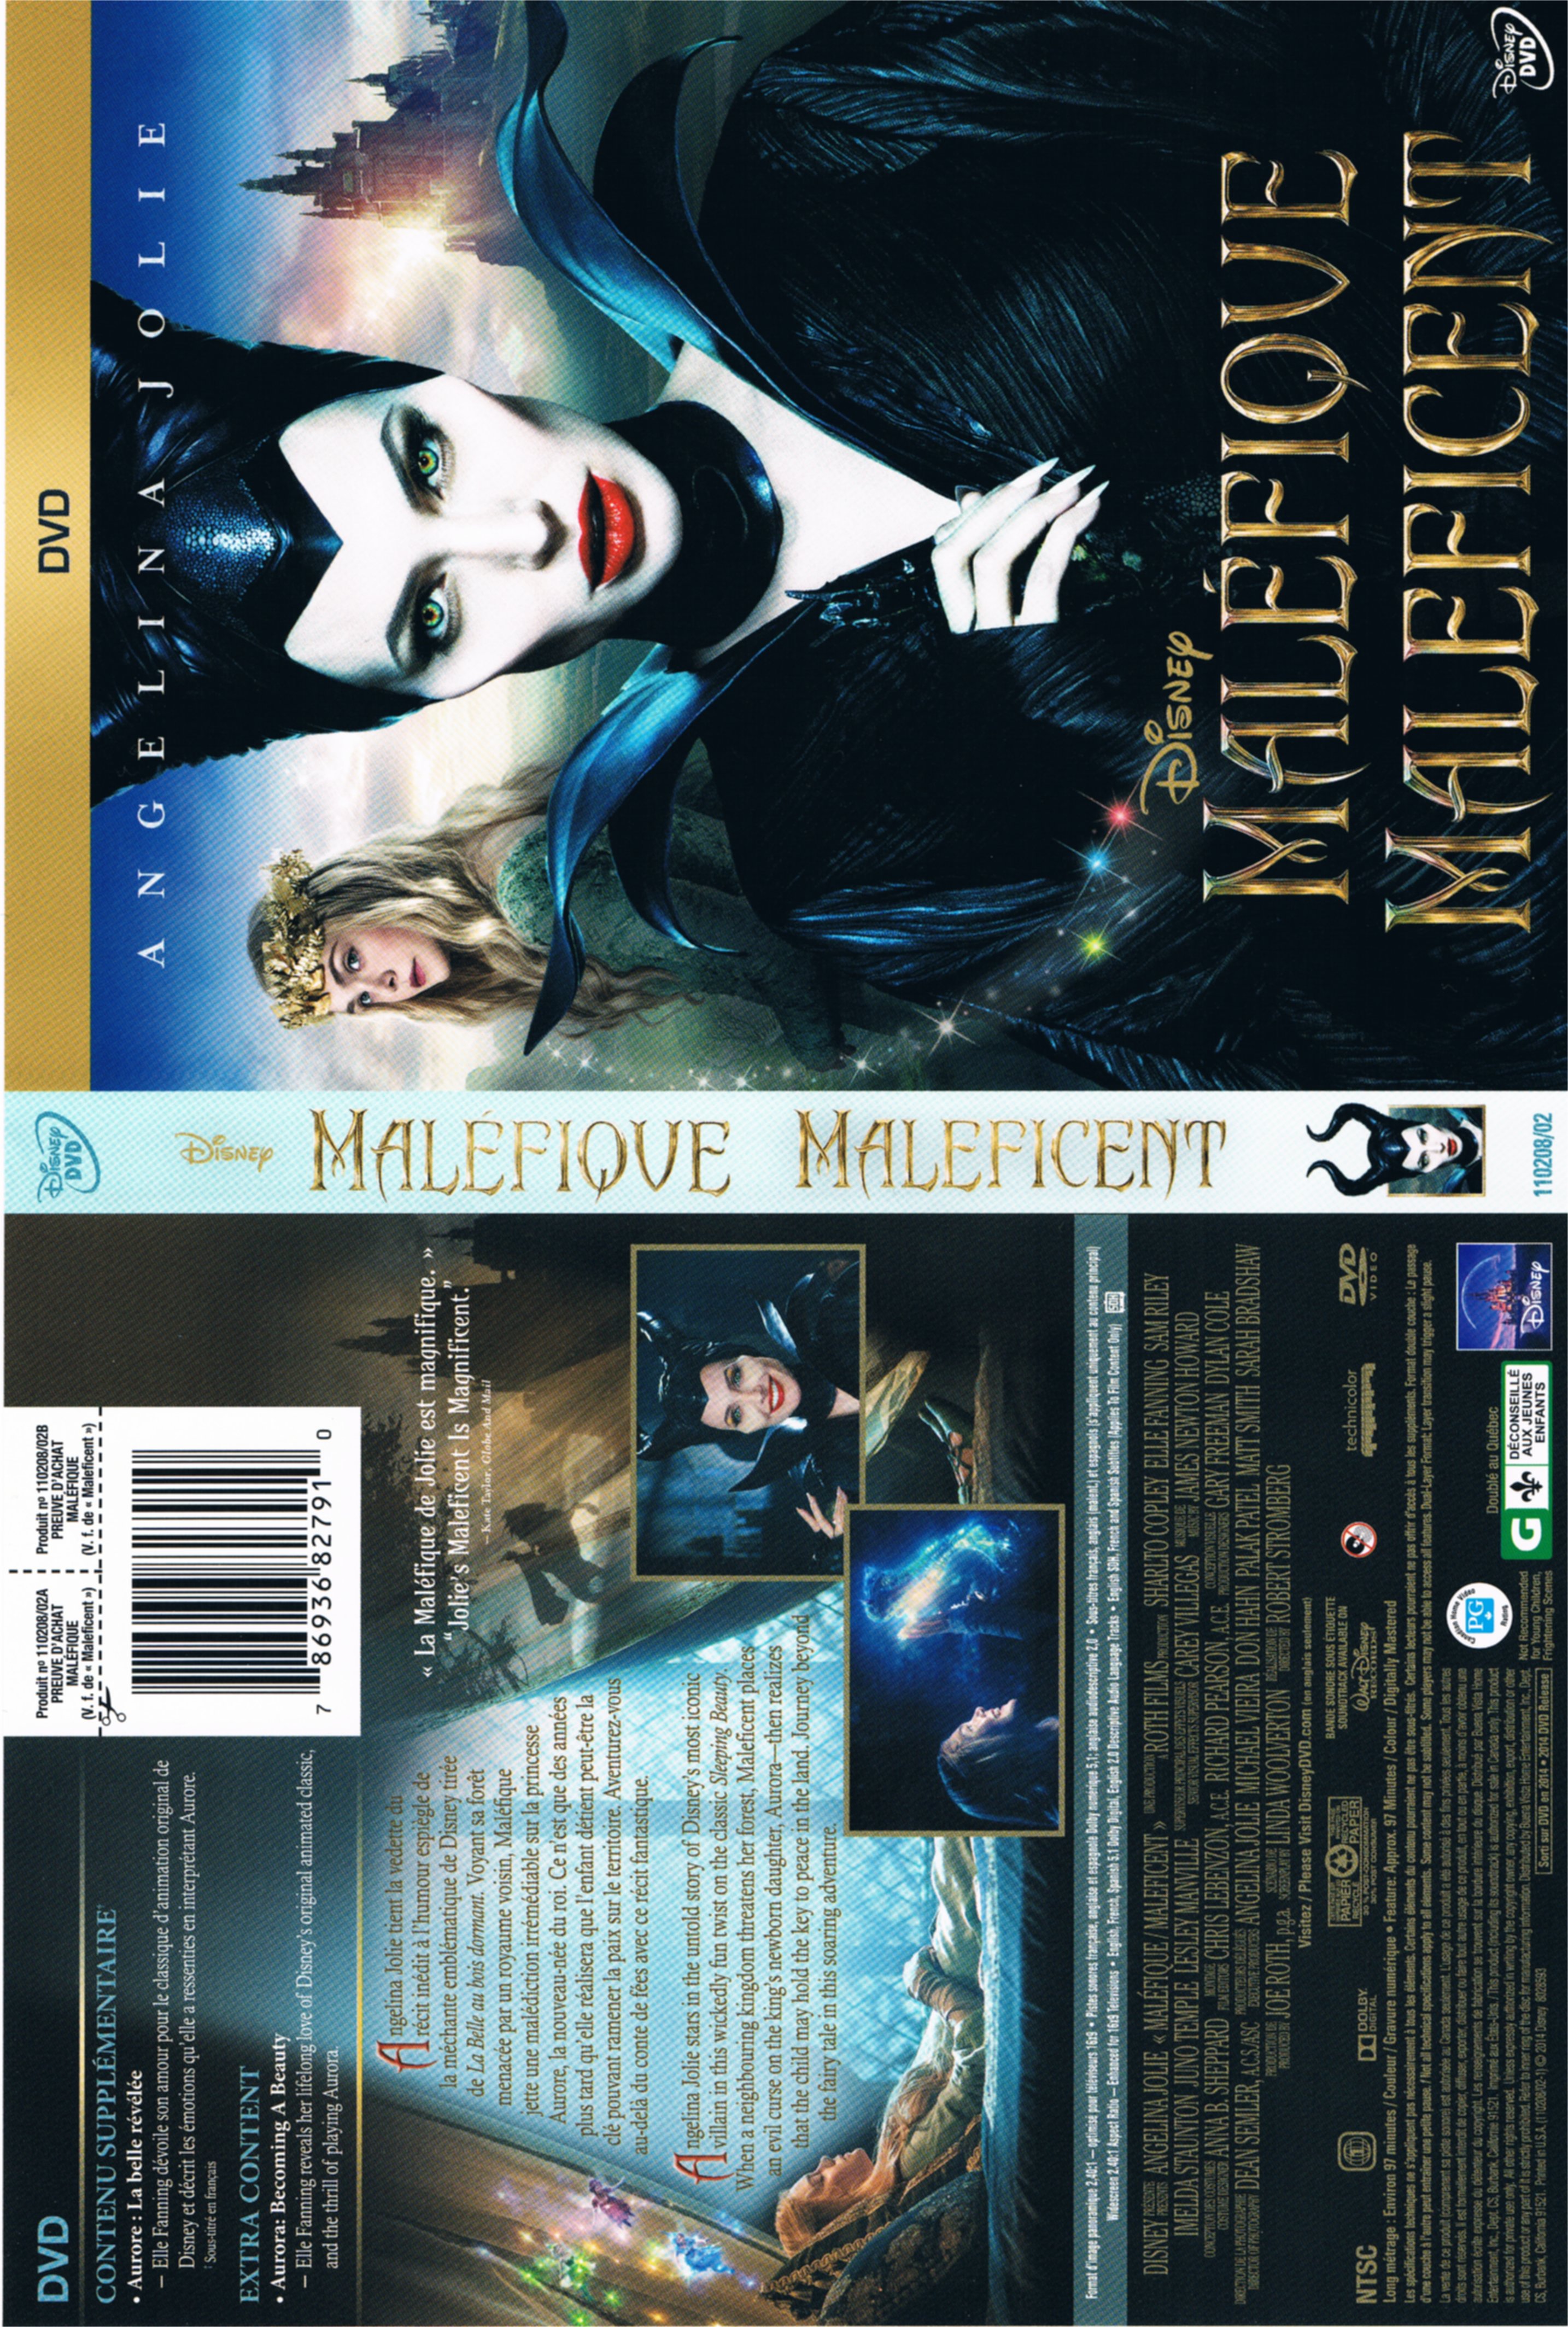 Jaquette DVD Malefique - Maleficant (2014) (Canadienne)